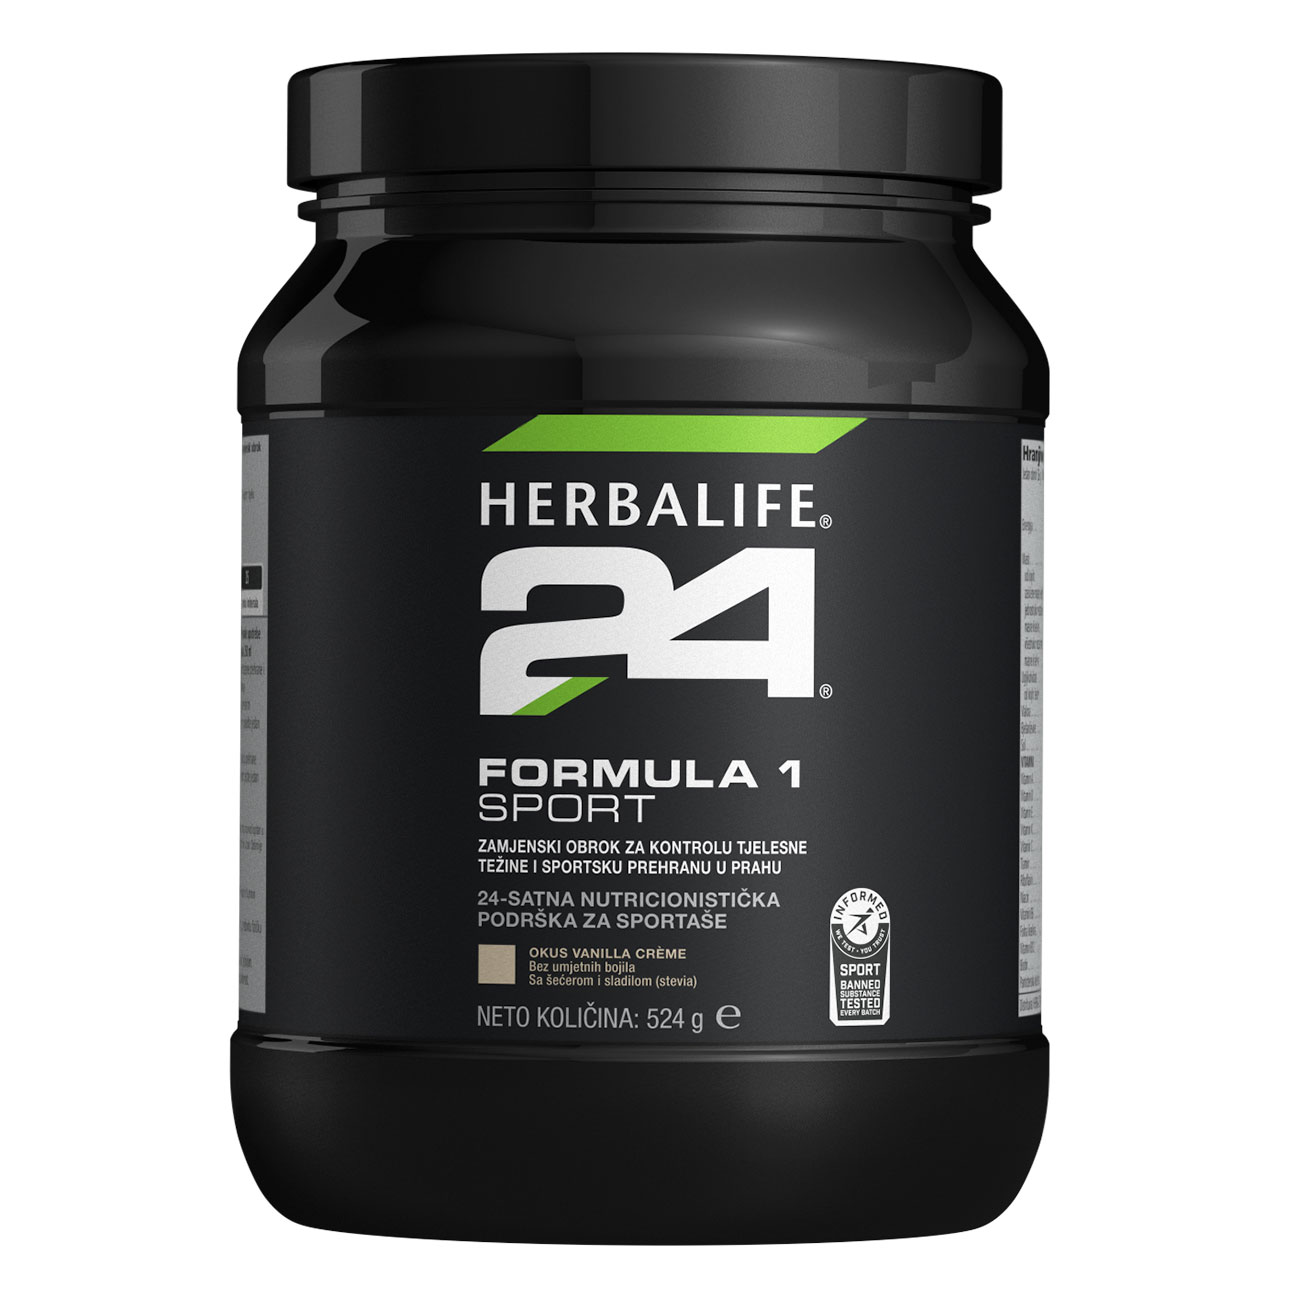 Herbalife24® Formula 1 Sport Zamjenski obrok za kontrolu tjelesne težine okus Vanilla Crème slika proizvoda